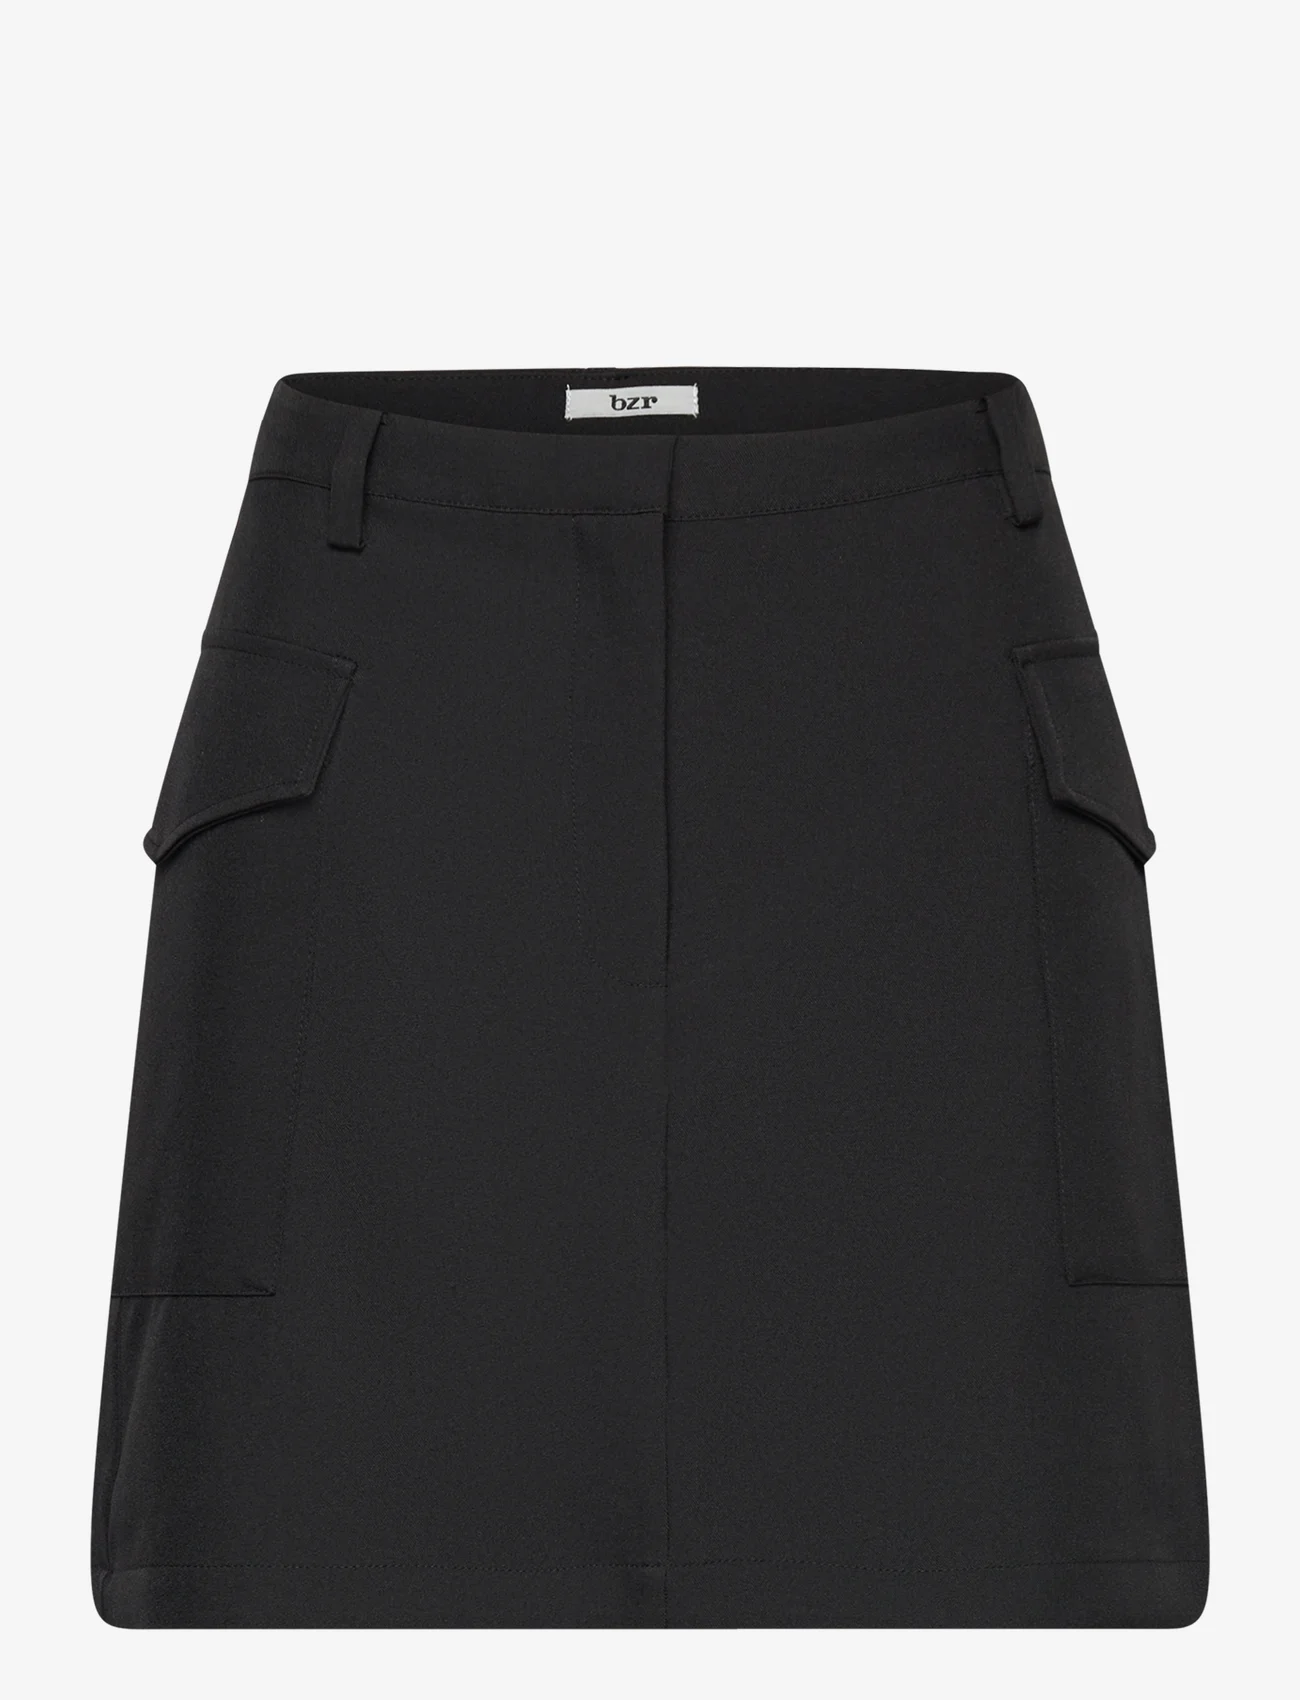 bzr - VibeBZCargo miniskirt - short skirts - black - 0